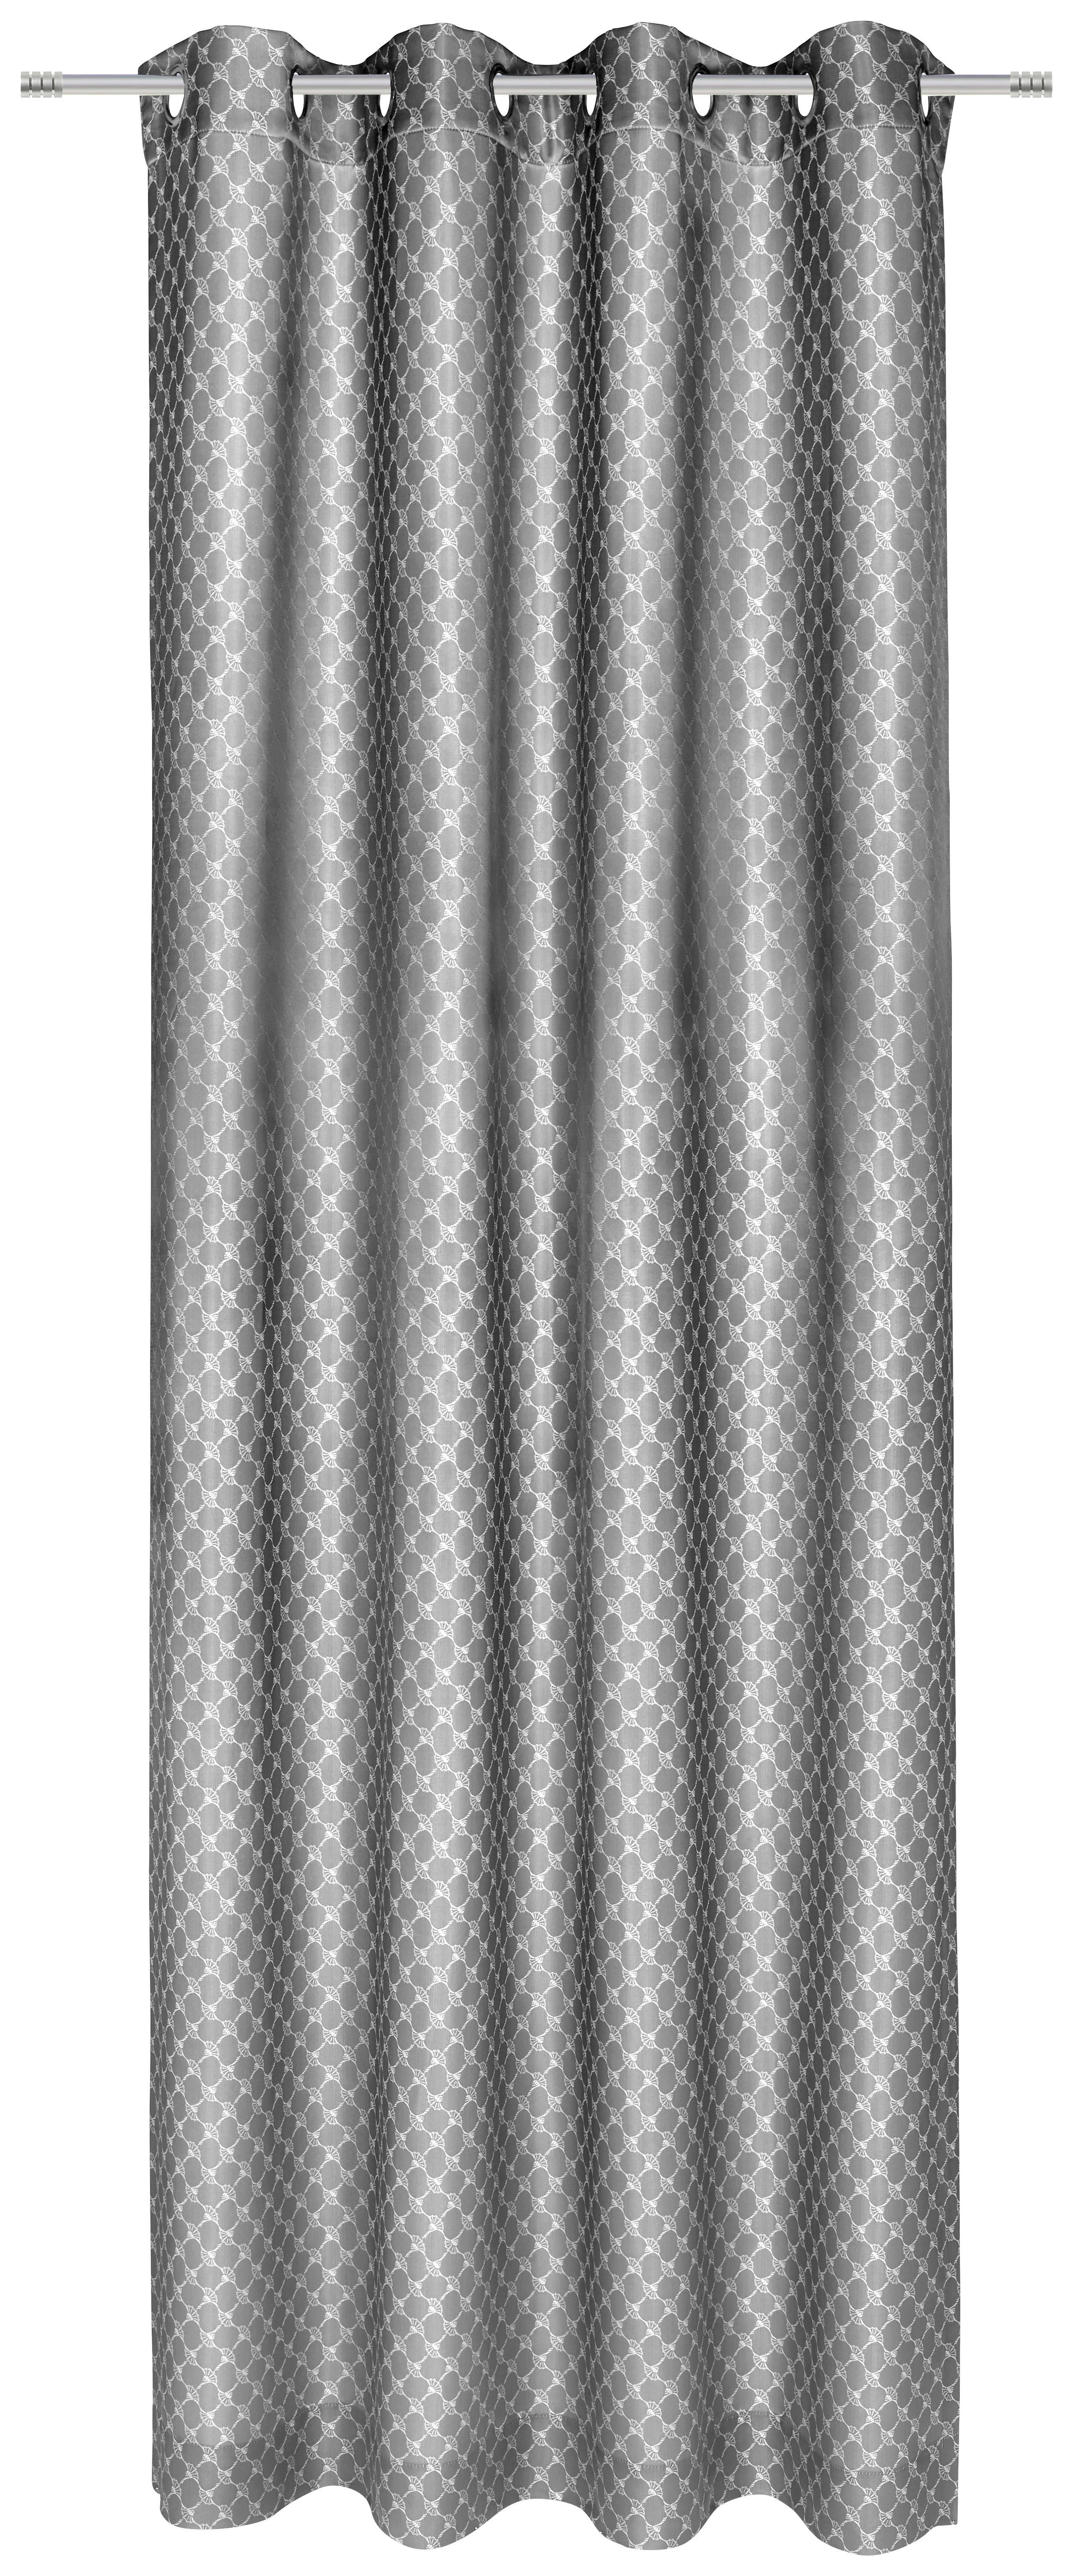 ZÁVĚS S OČKY, neprůsvitné, 140/250 cm - barvy stříbra, Design, textil (140/250cm) - Joop!